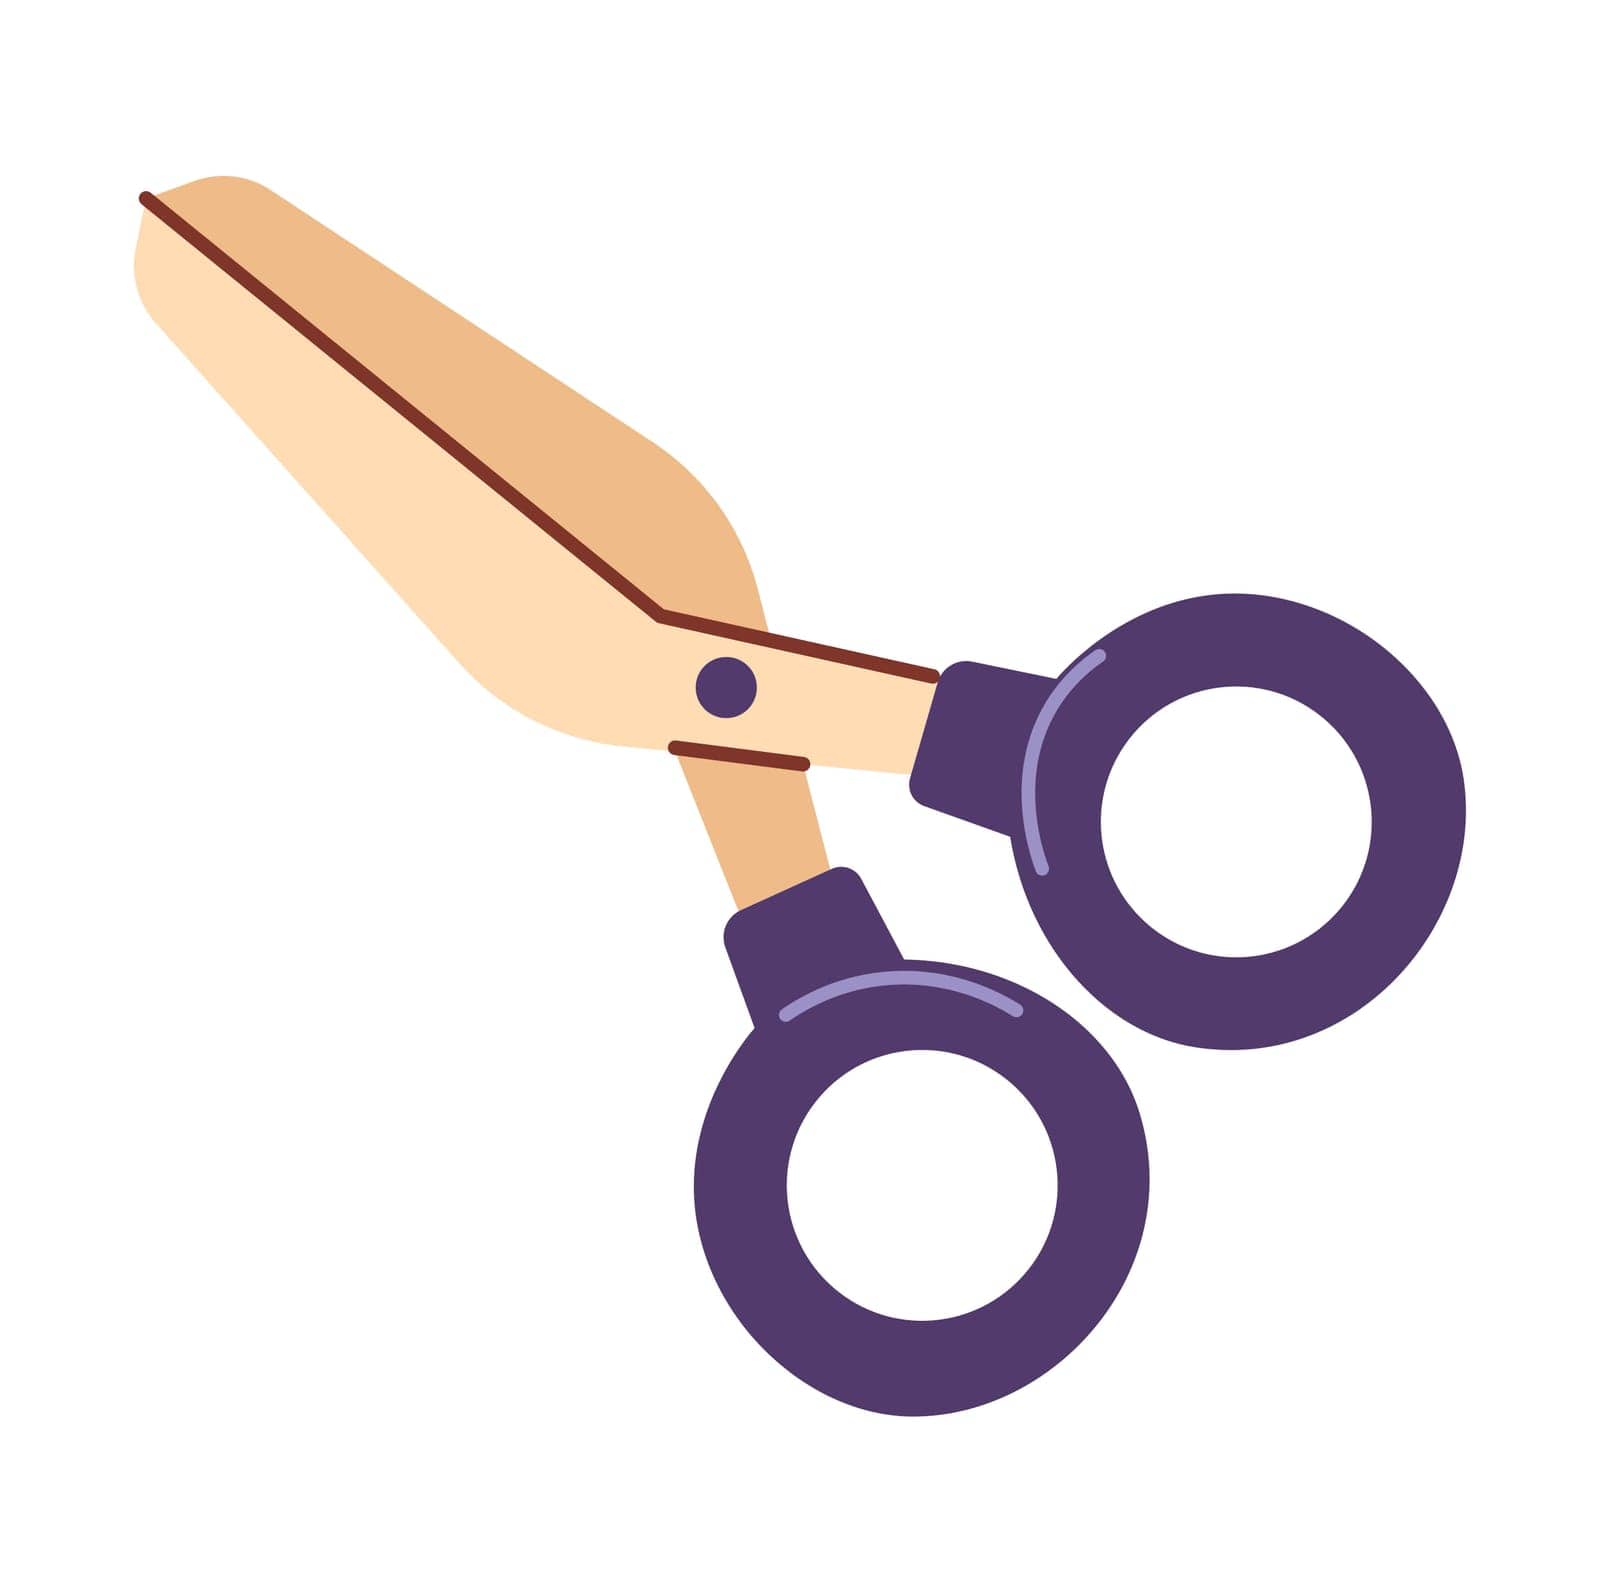 School supplies, scissors instrument for cutting by Sonulkaster